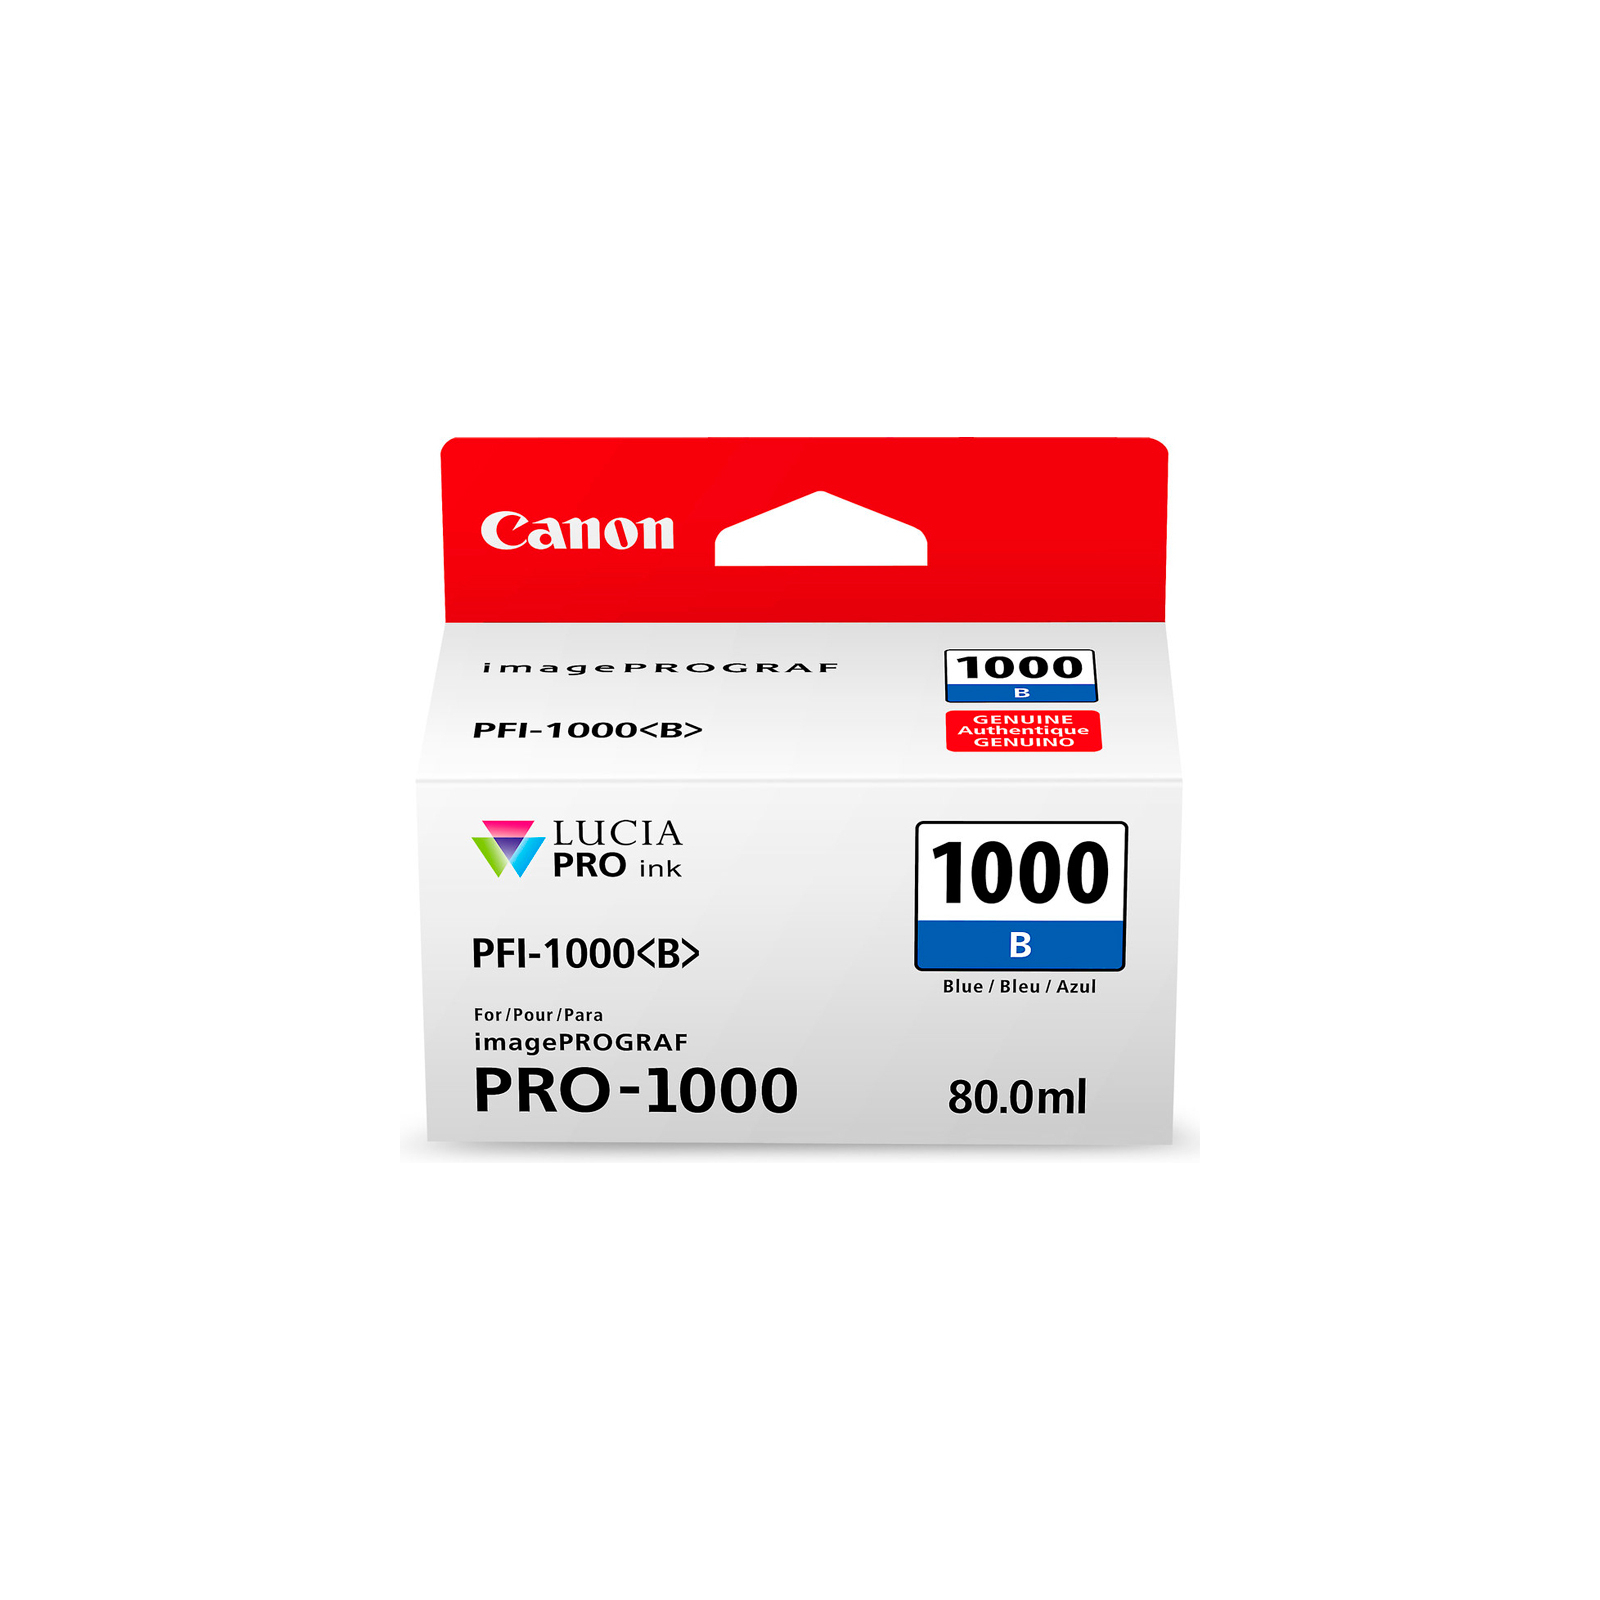 Картридж Canon PFI-1000PBK (Photo Black) (0546C001)